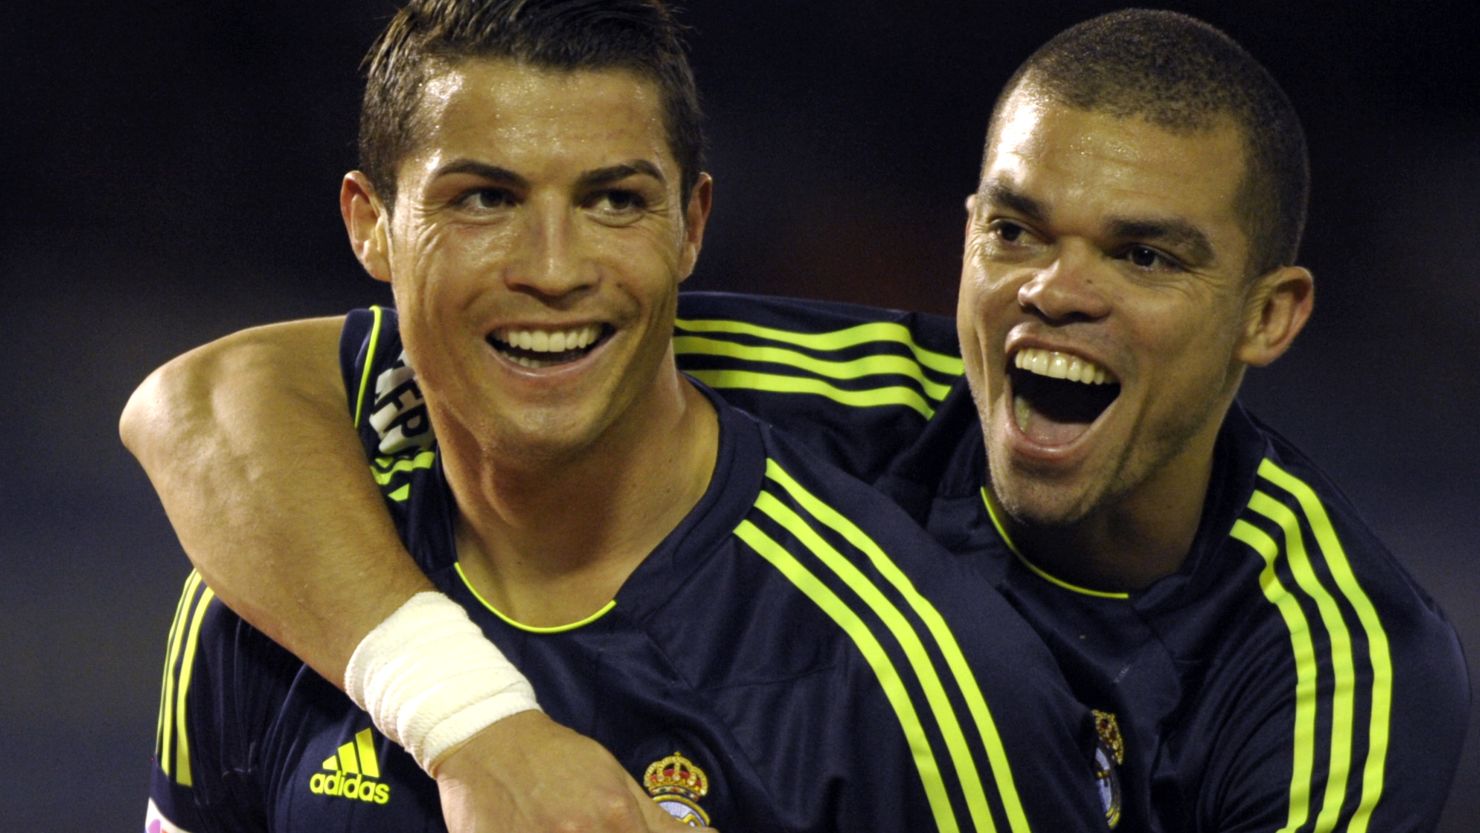 Ronaldo scored twice as Real Madrid beat Celta Vigo 2-1 in the Spanish League